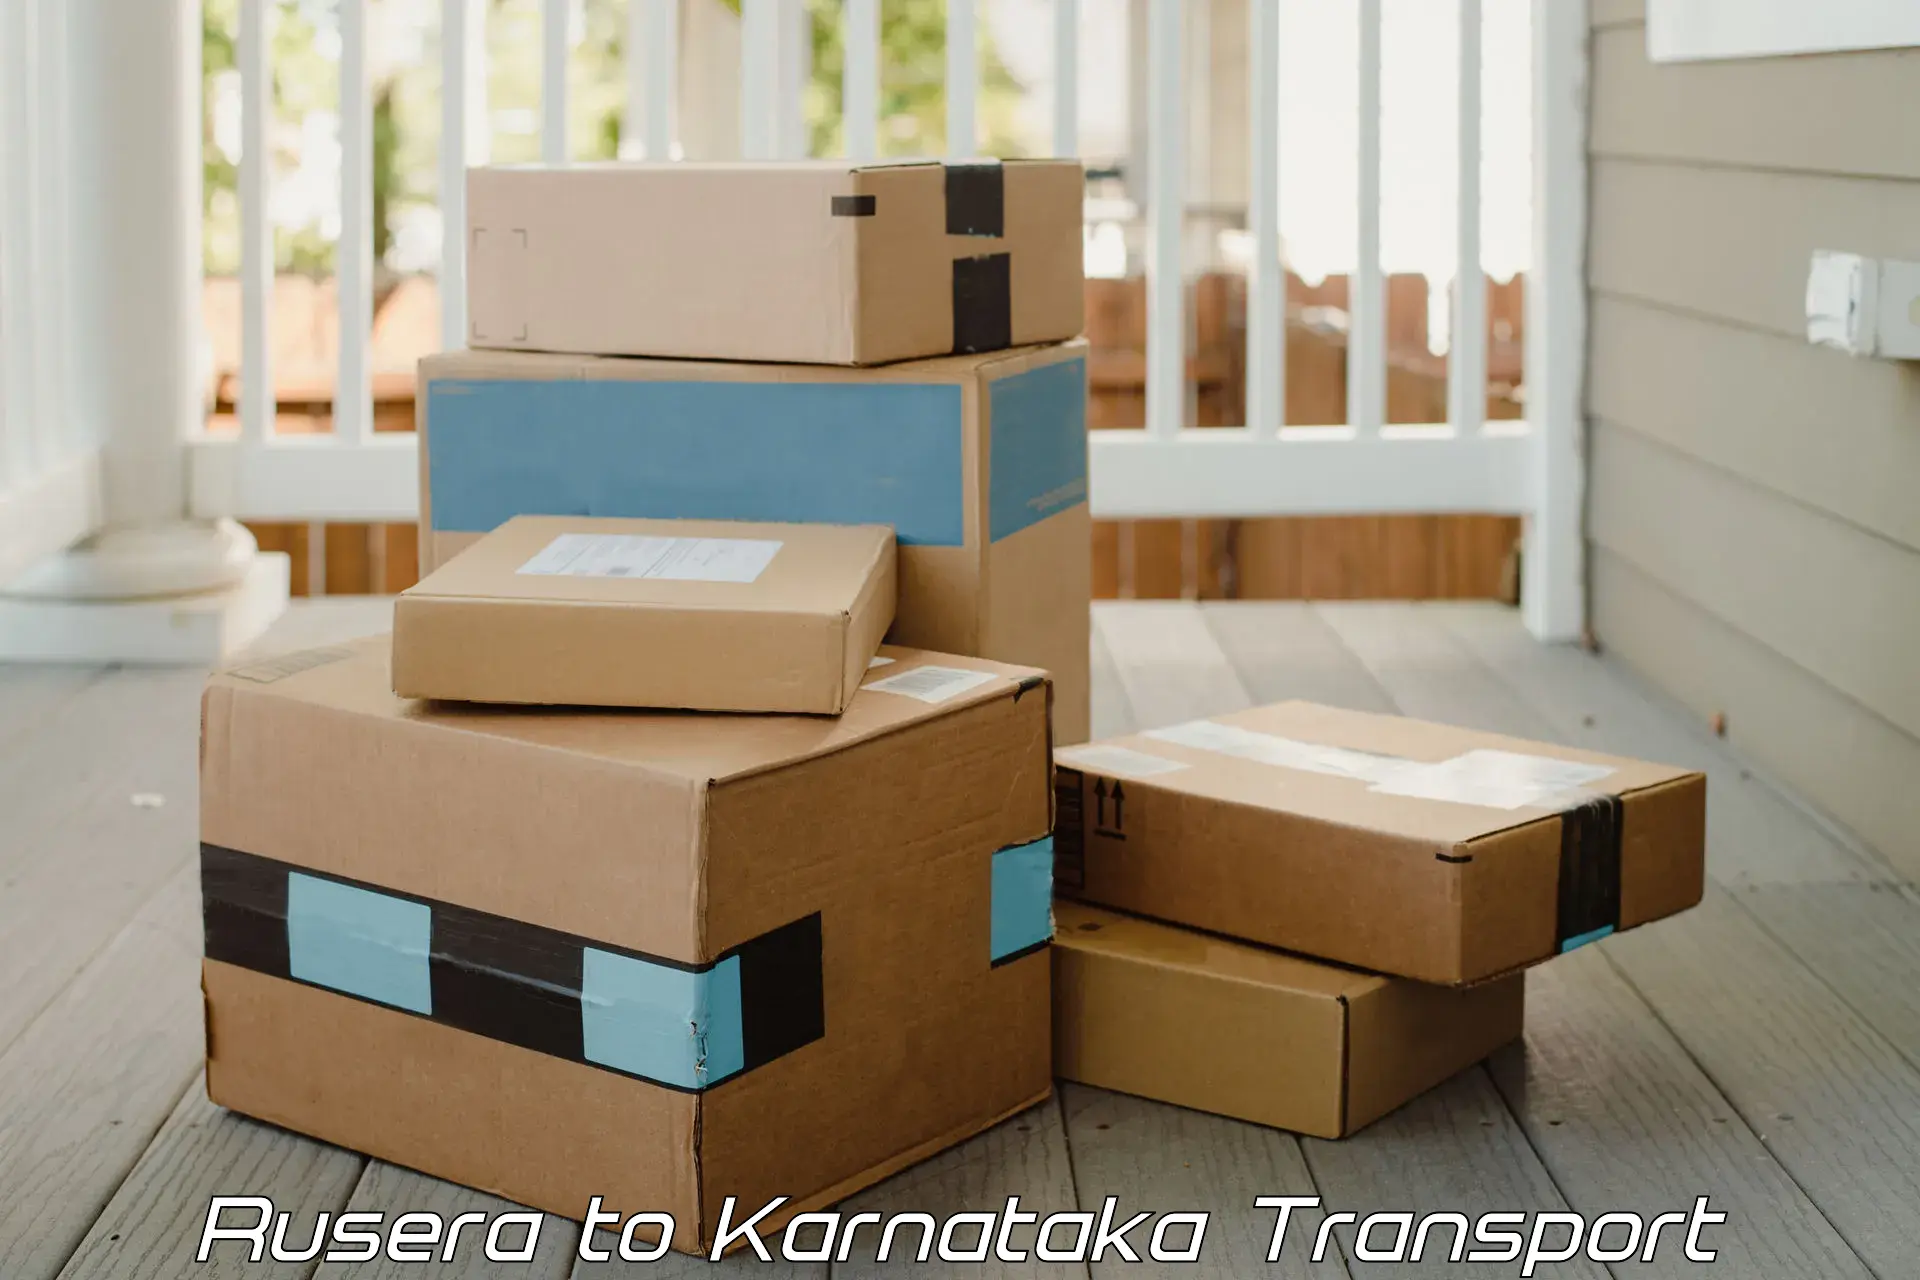 Goods delivery service Rusera to Kulshekar